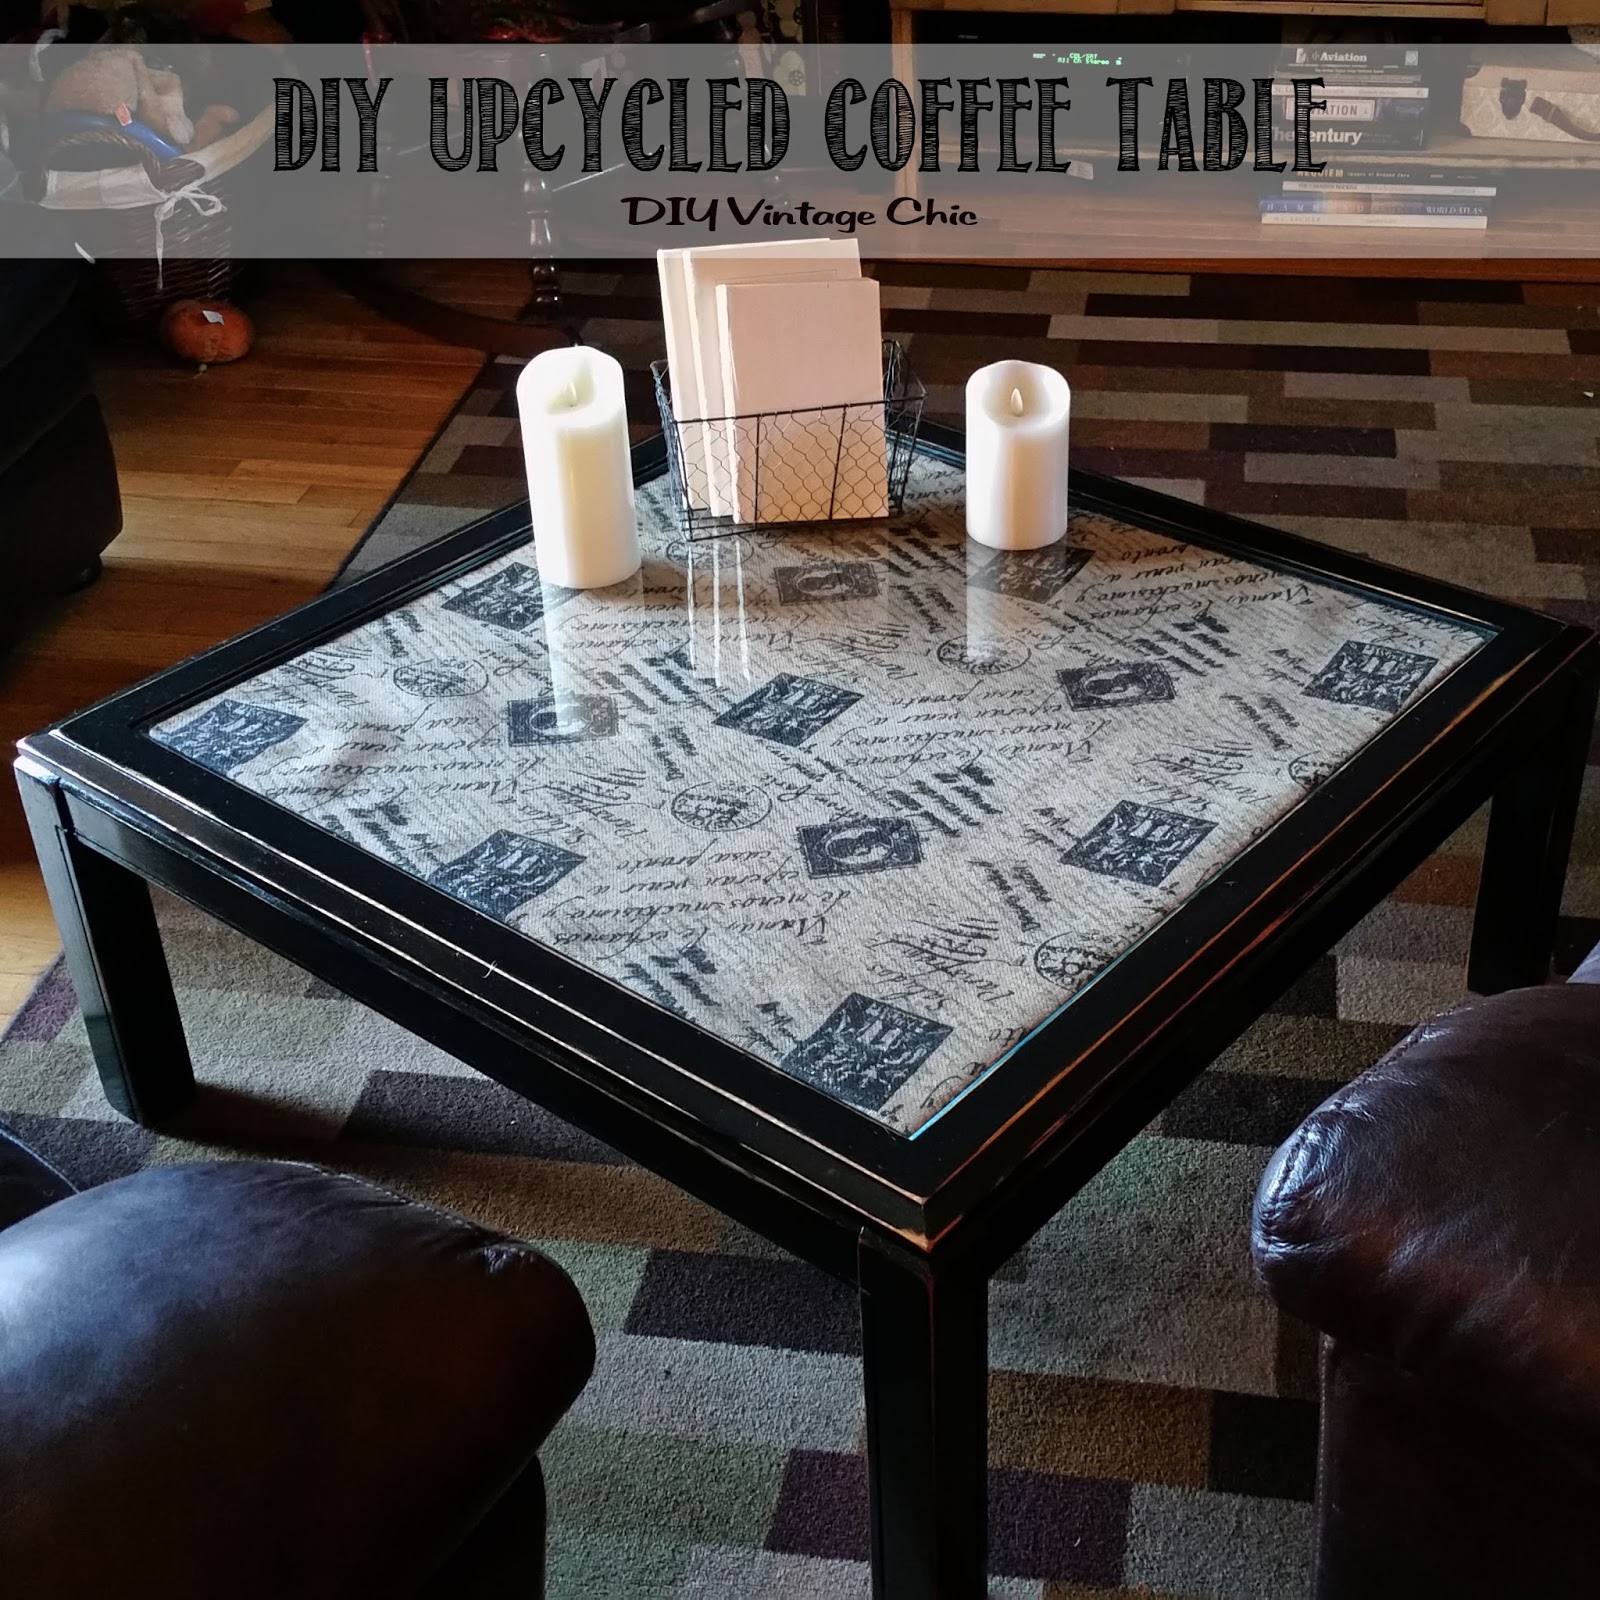 DIY Vintage Chic: DIY Upcycled Coffee Table